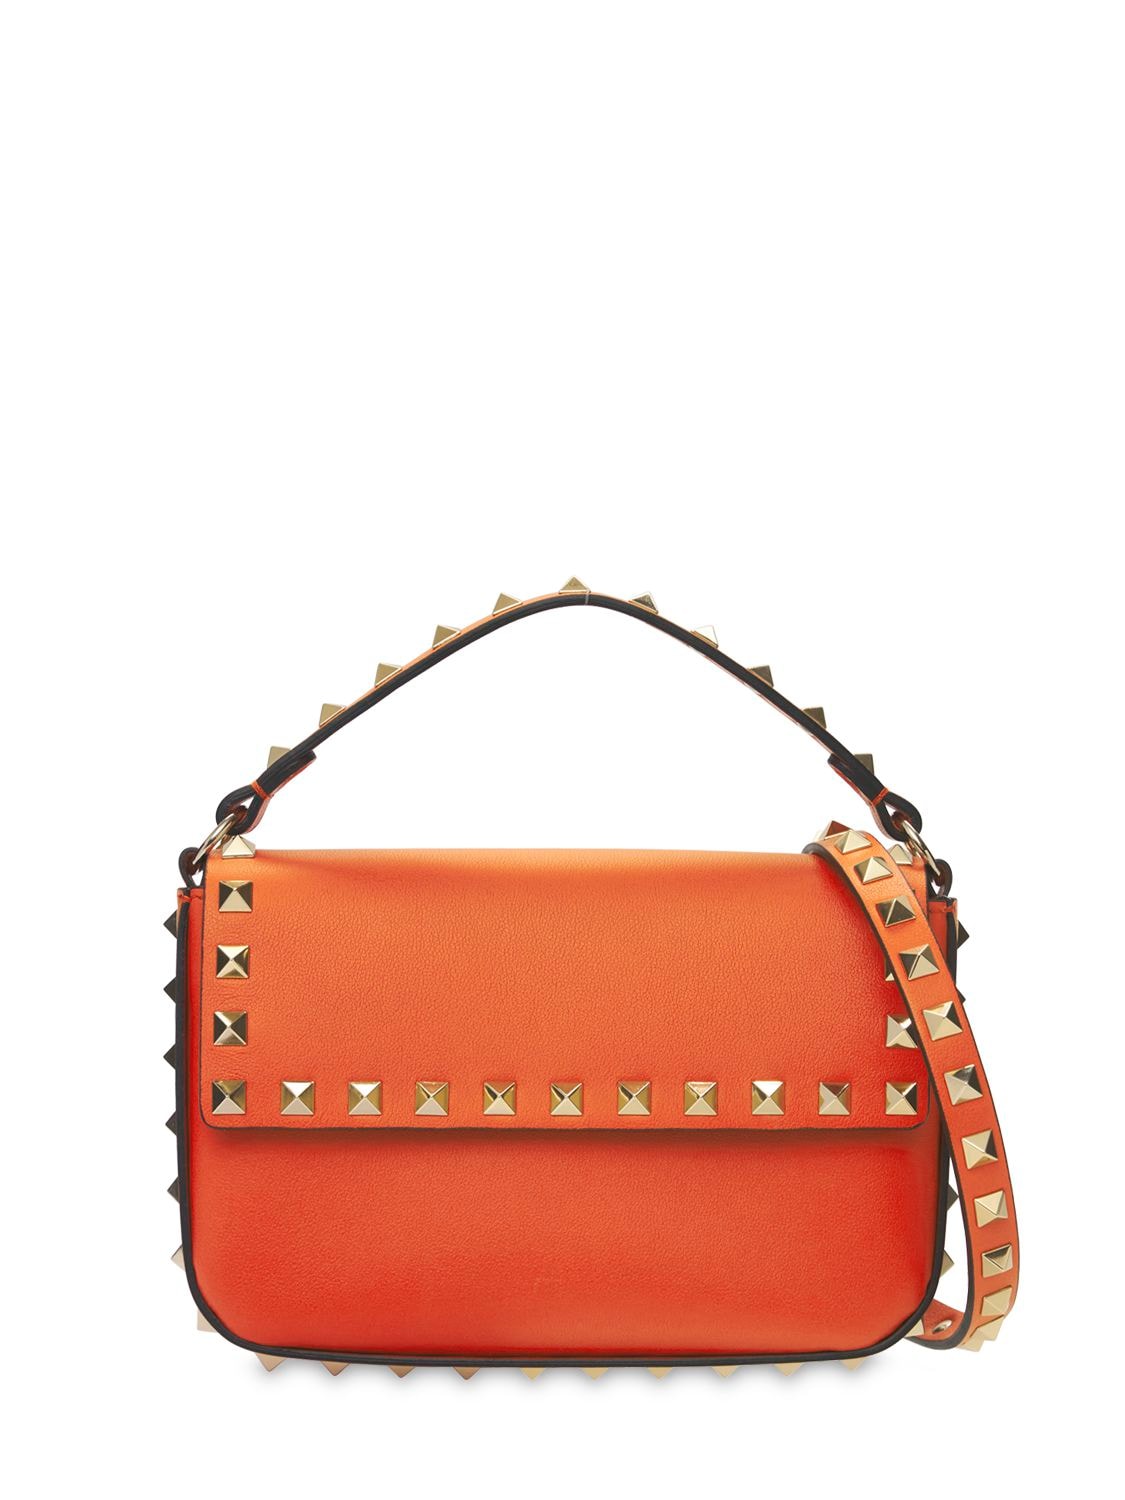 Valentino Garavani Small Leather Rockstud Top Handle Bag In Orange